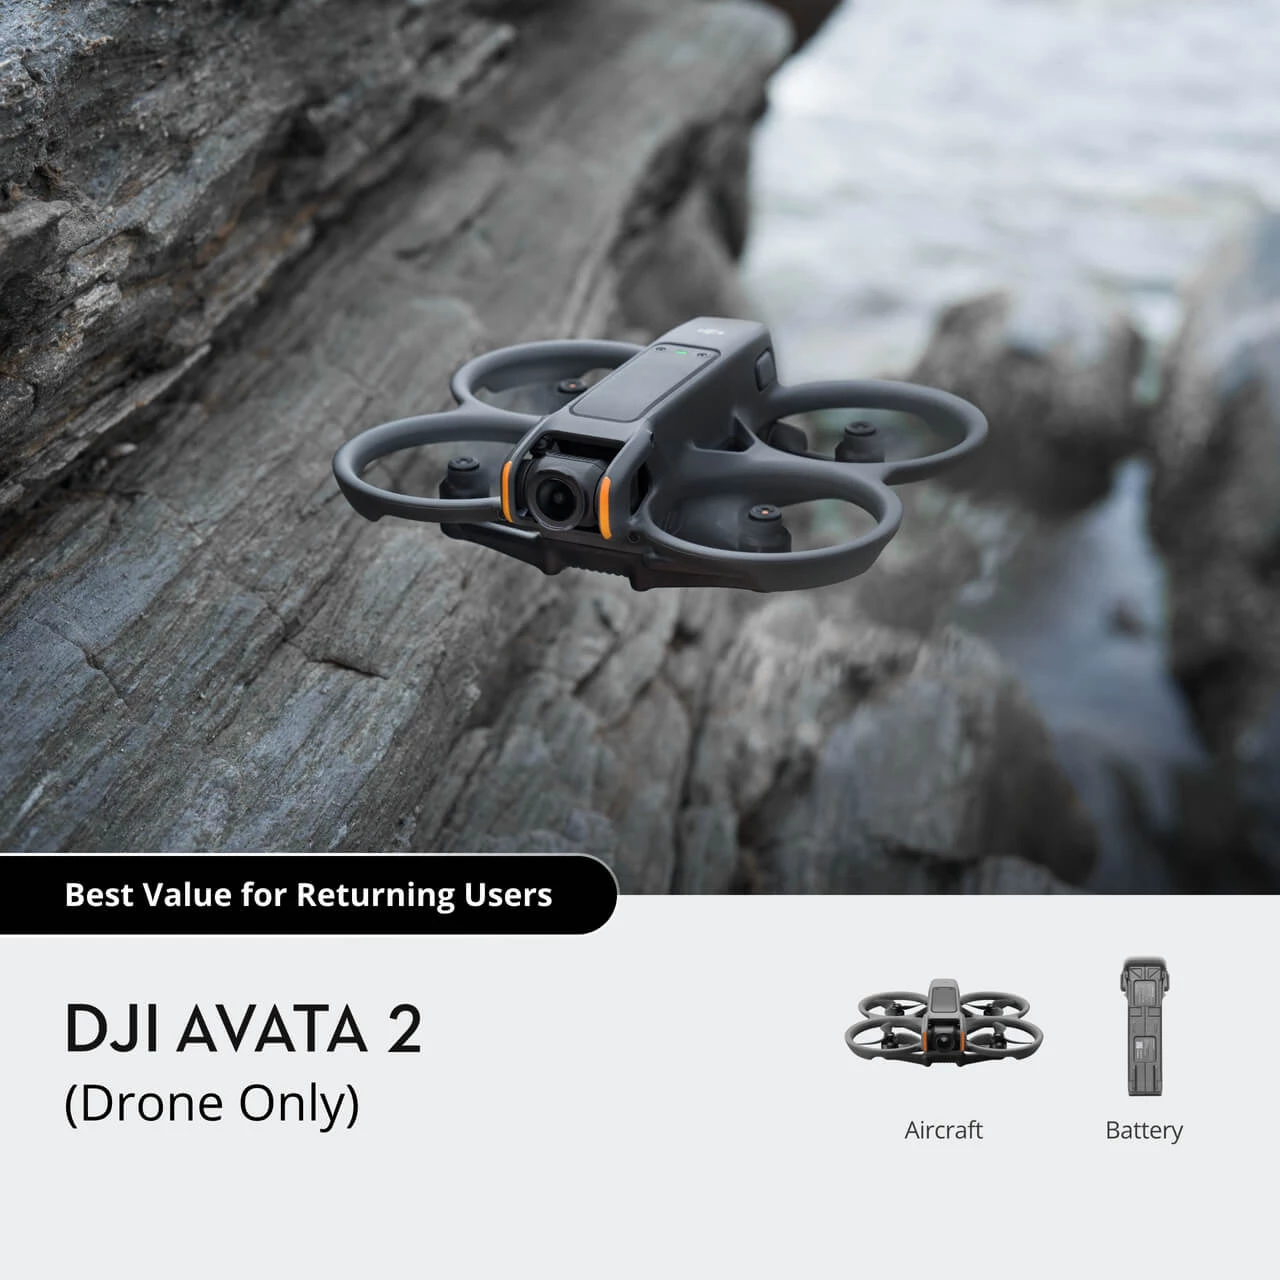 DJI AVATA 2 (Drone Only)